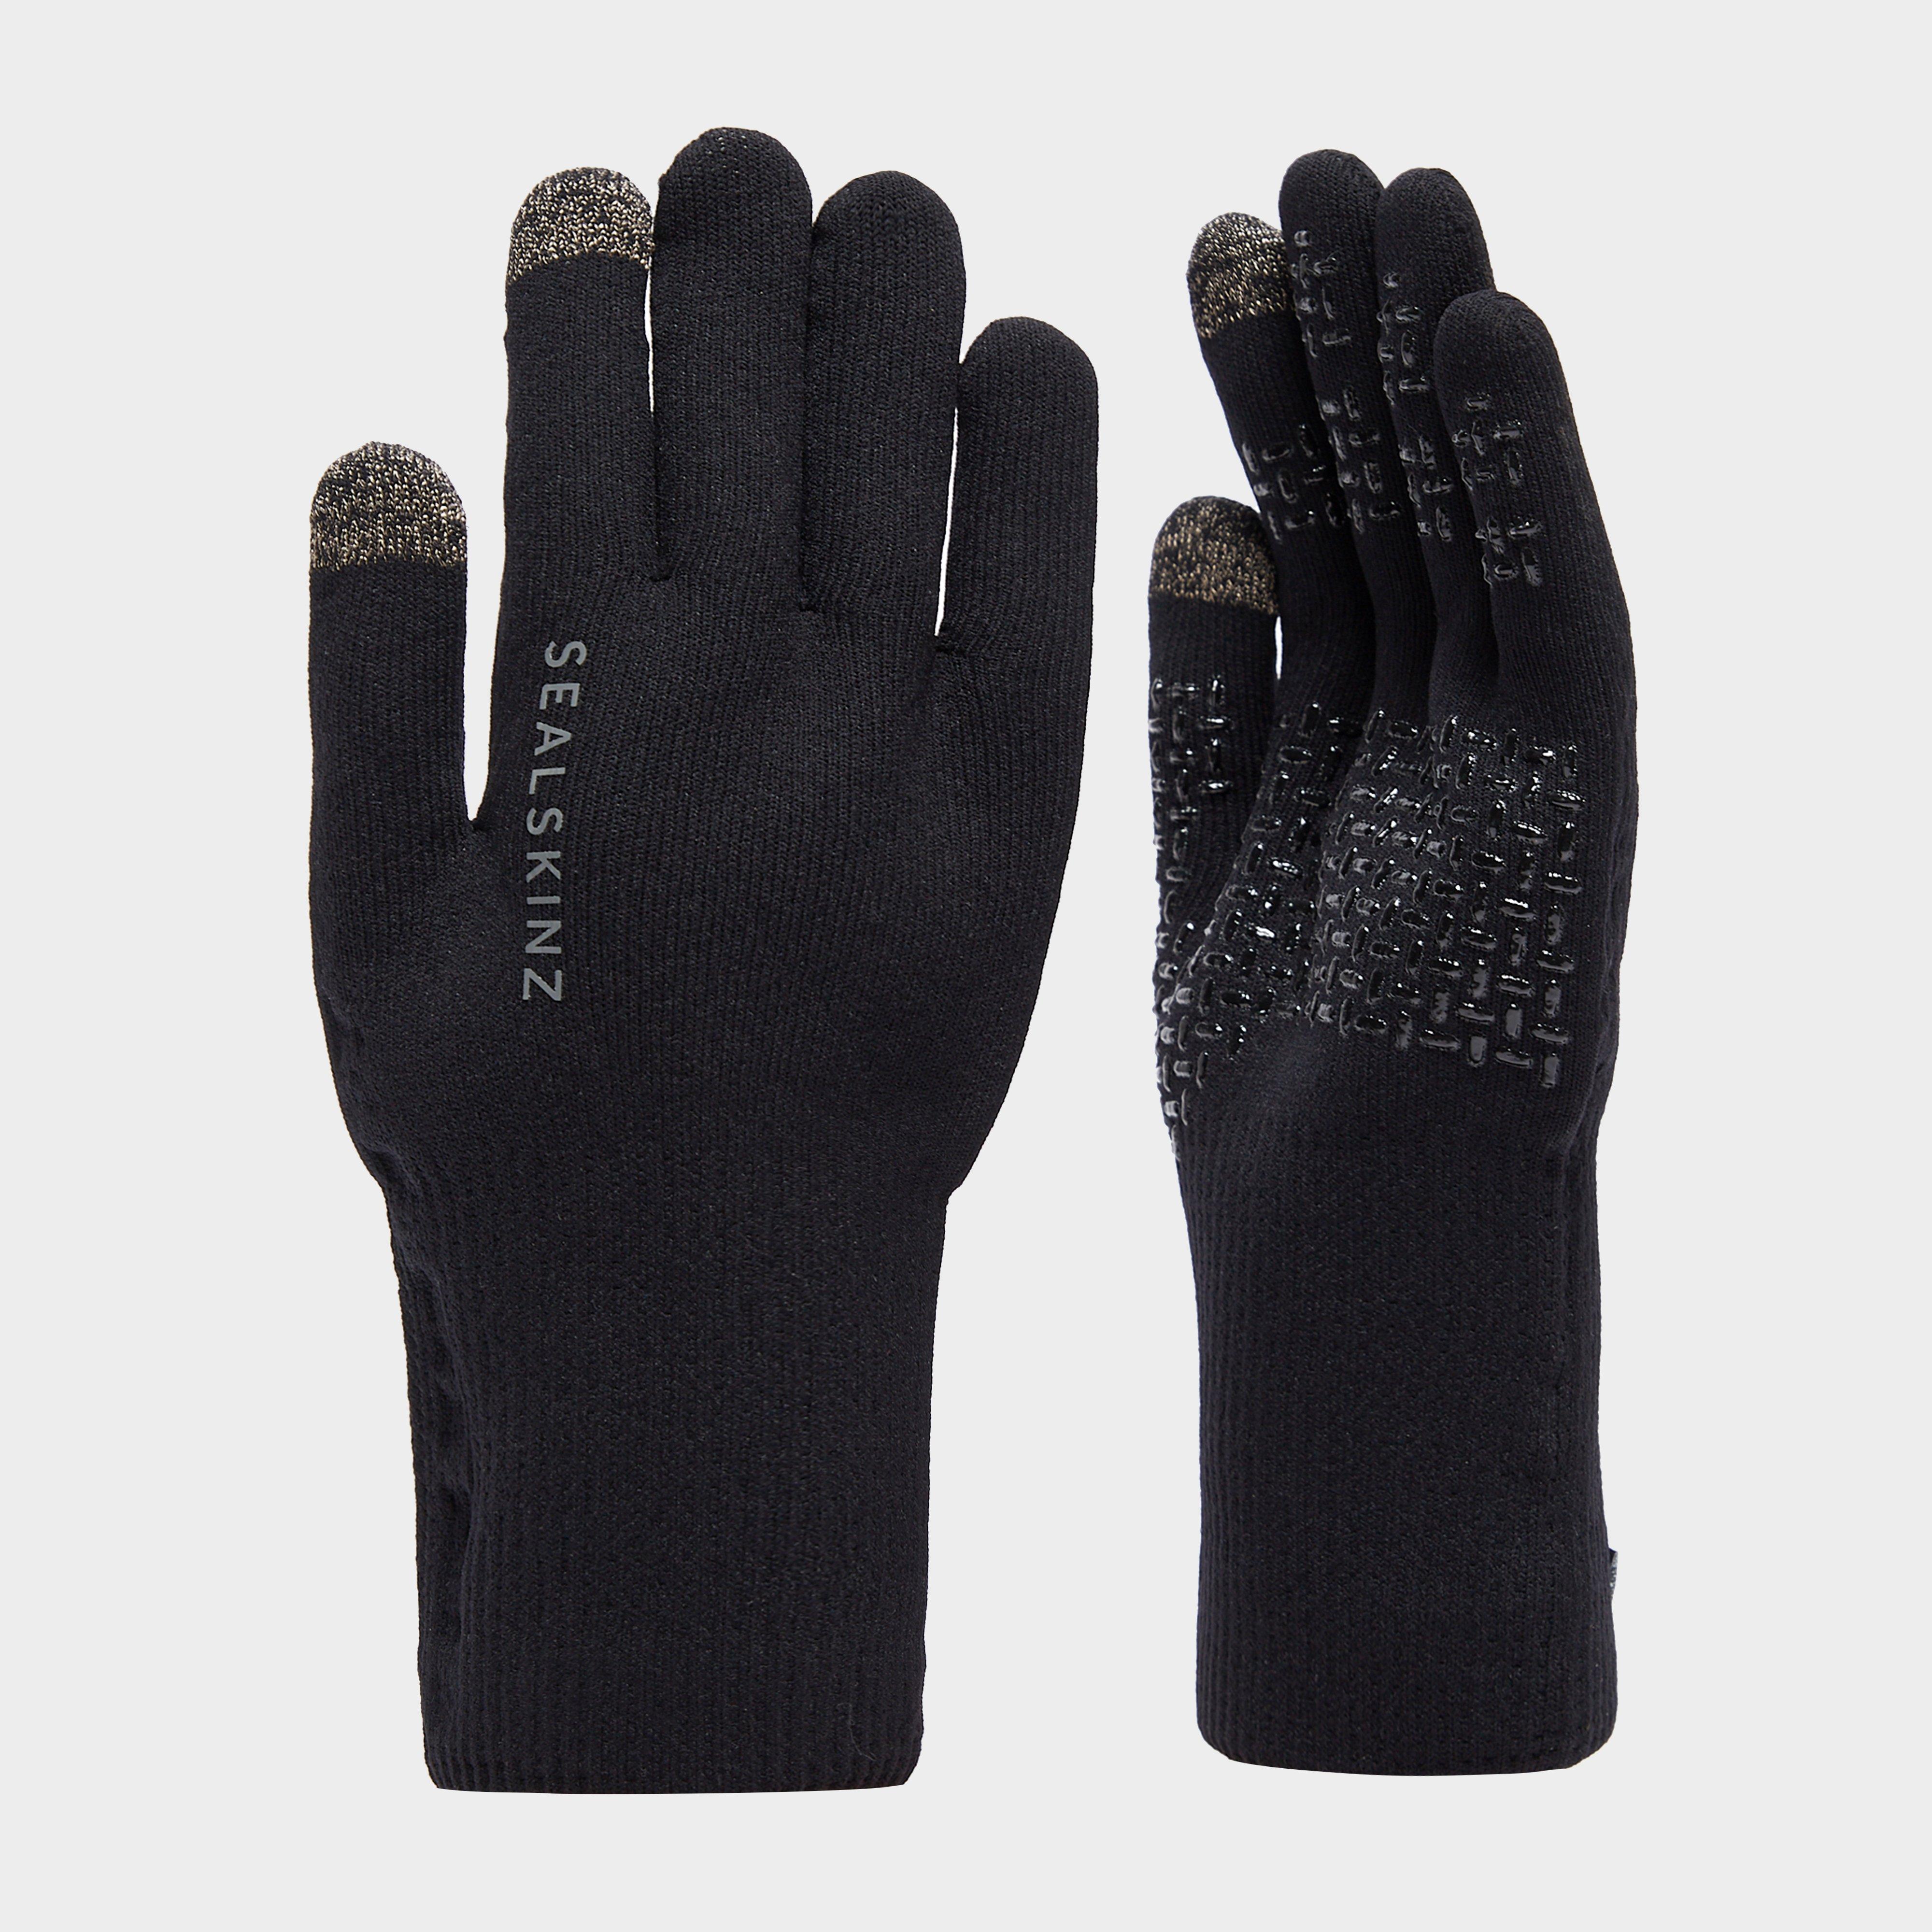 Sealskinz Waterproof All Weather Ultra Grip Glove - Black/grip  Black/grip